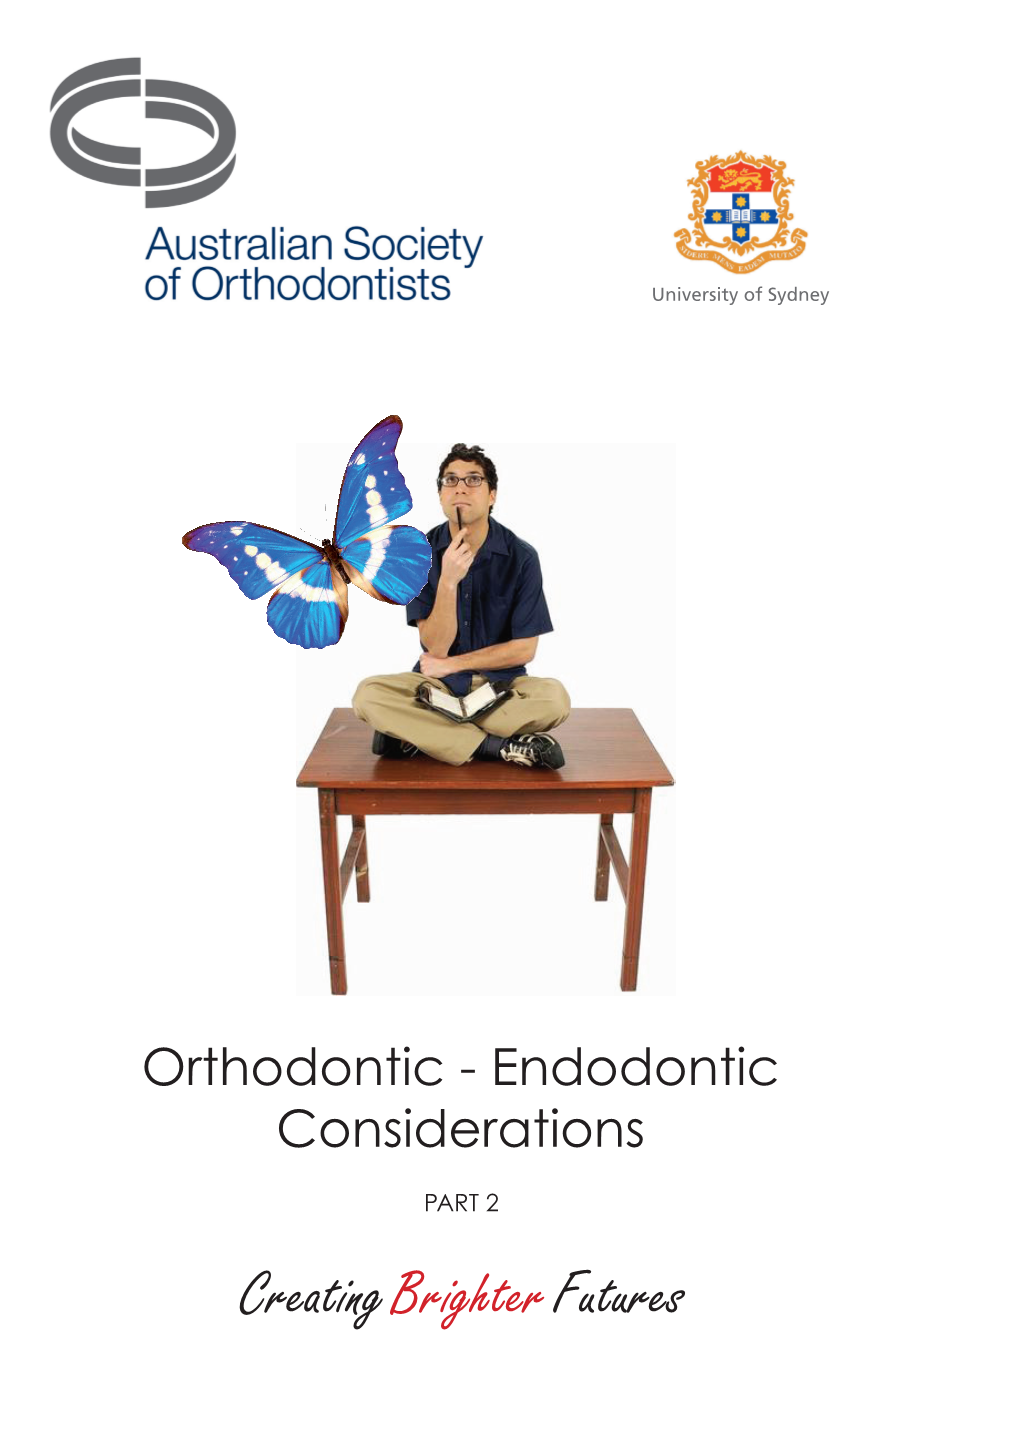 Endodontic Considerations